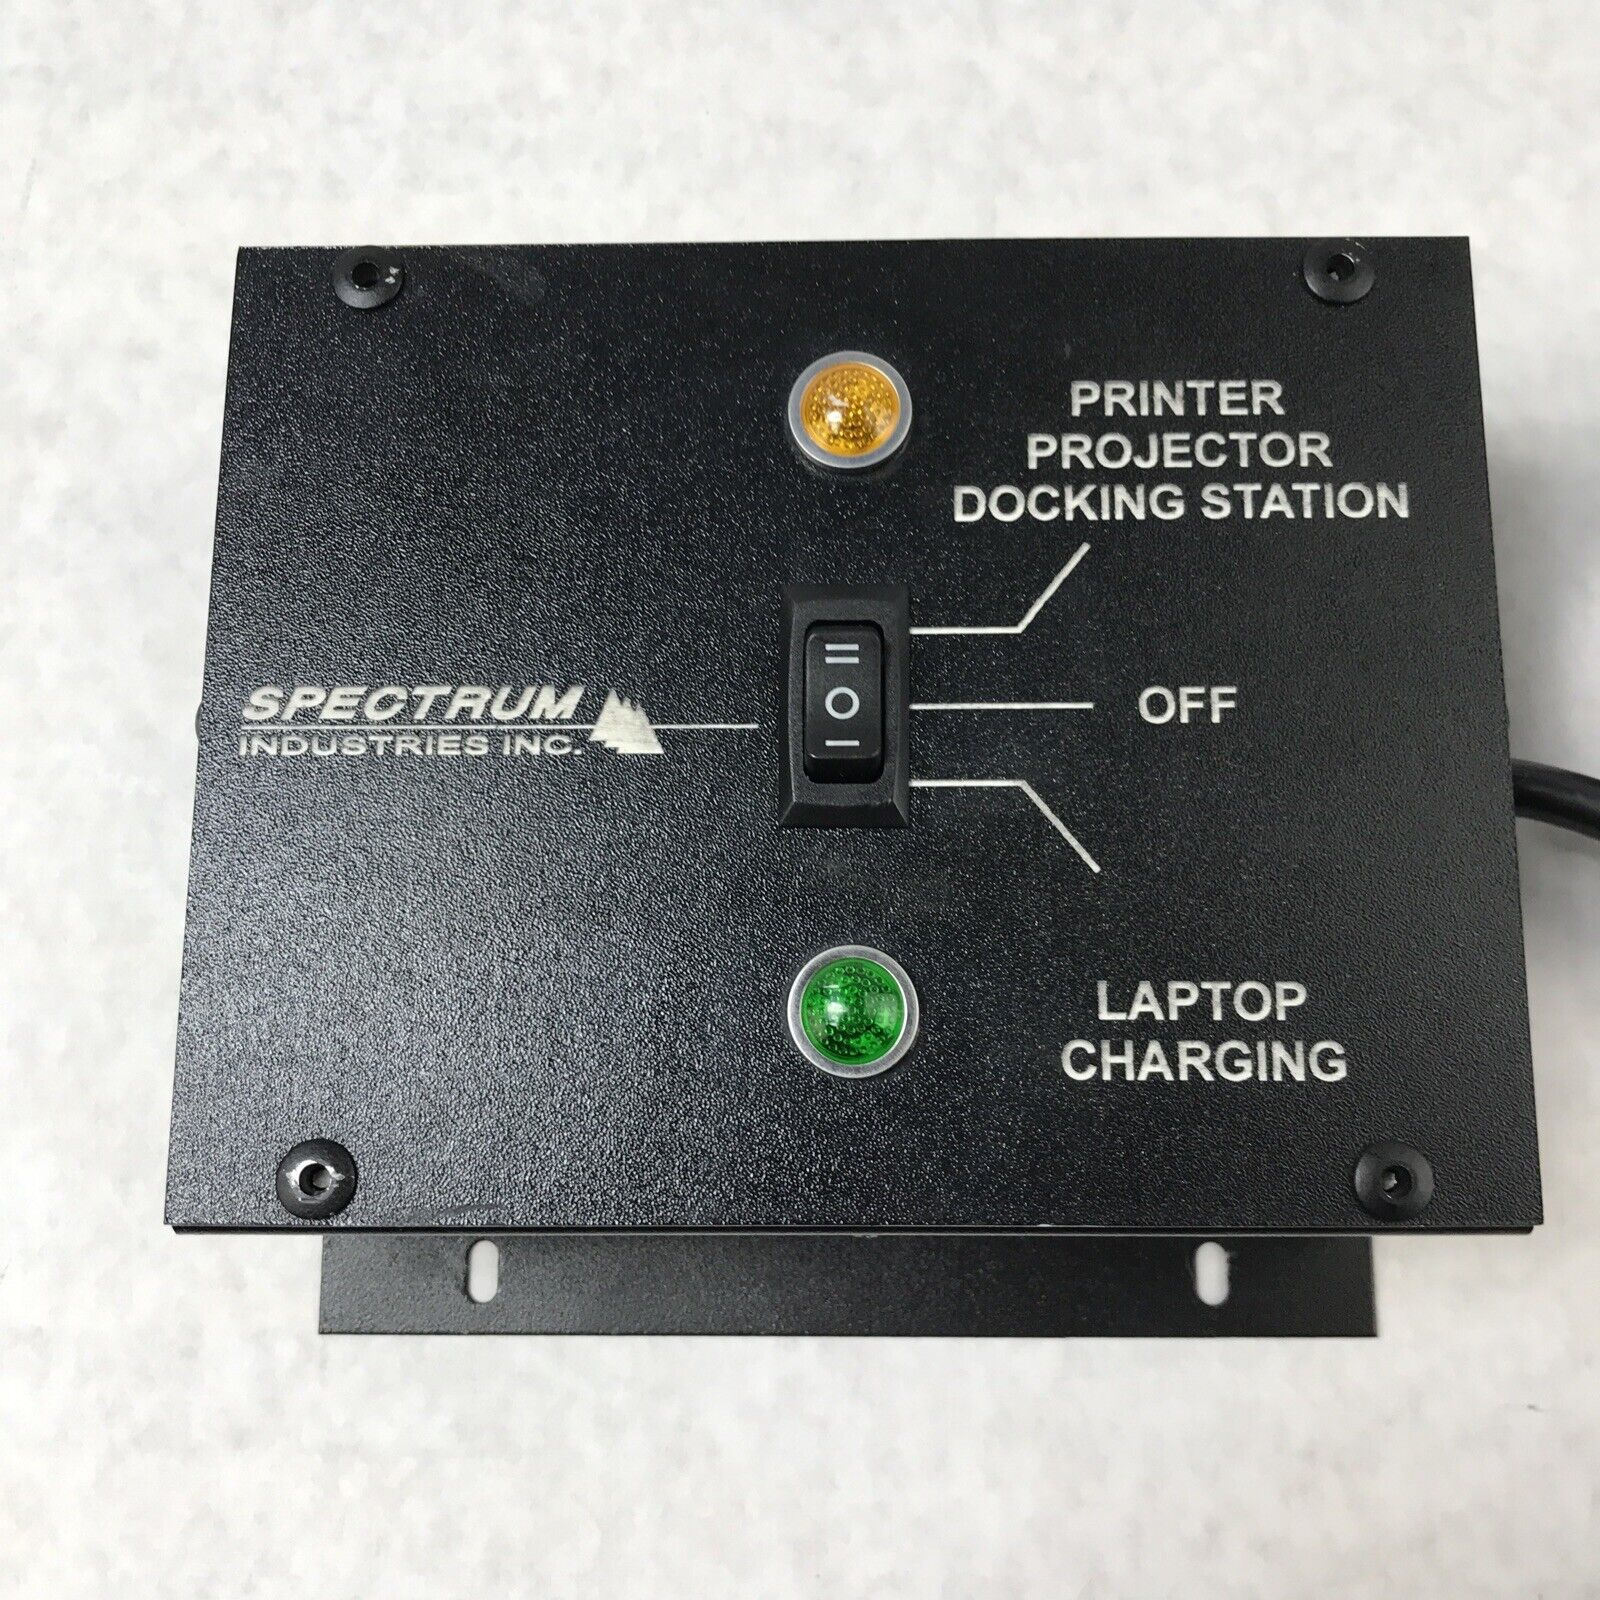 Spectrum Industries Printer Projector Docking Station / Laptop Docking Selector